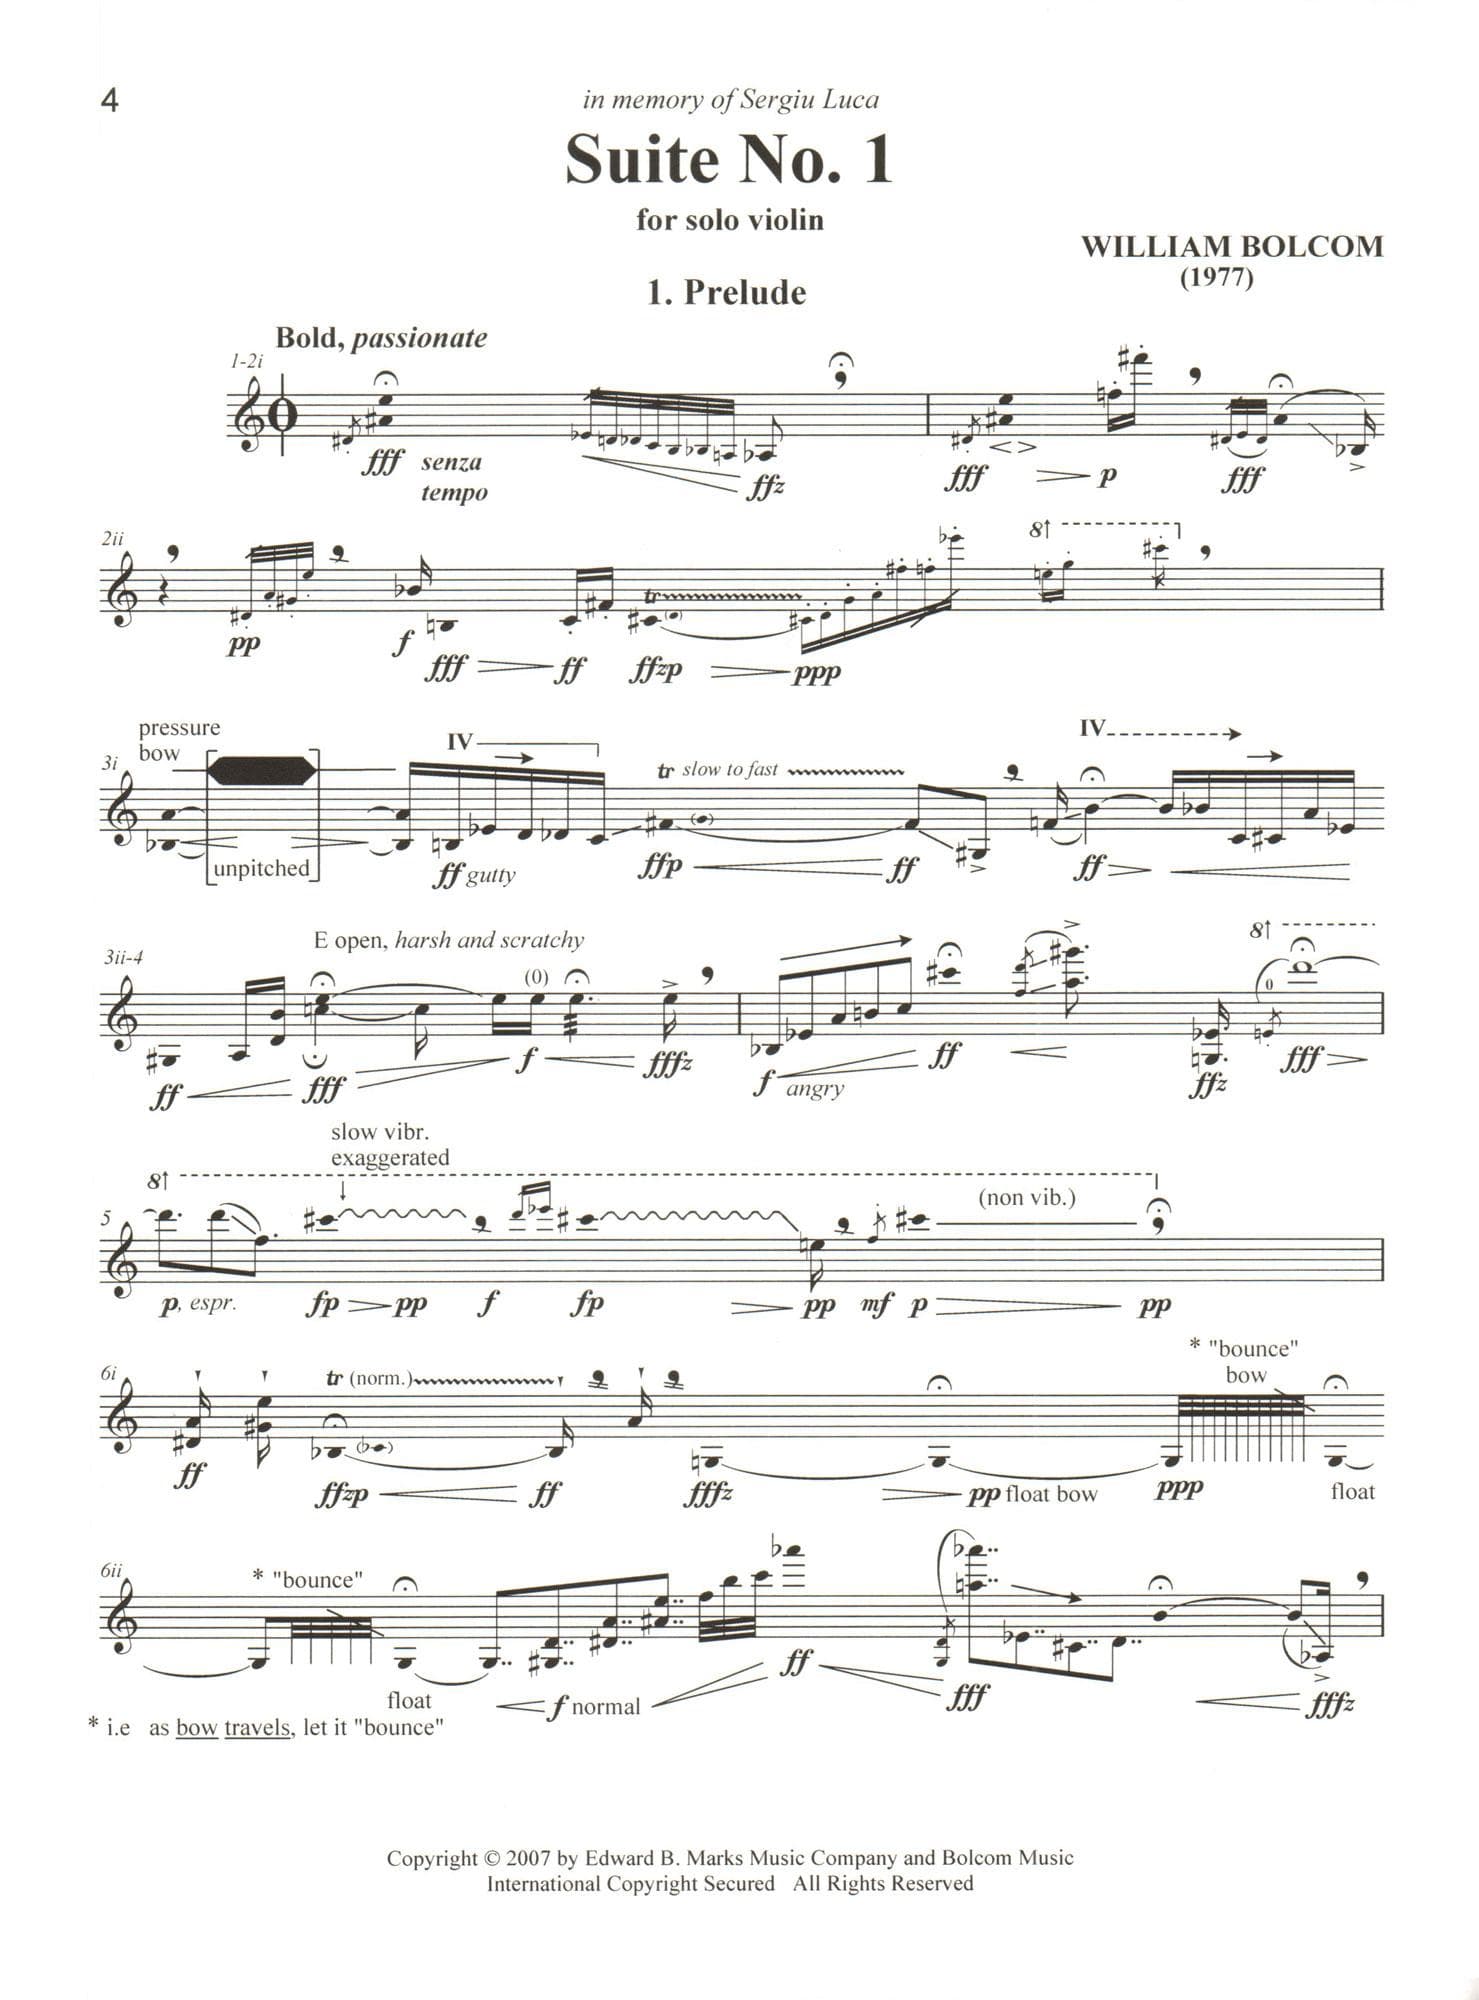 Bolcom, William - Suites No. 1 and No. 2 - for Solo Violin - Edward B. Marks Music Company